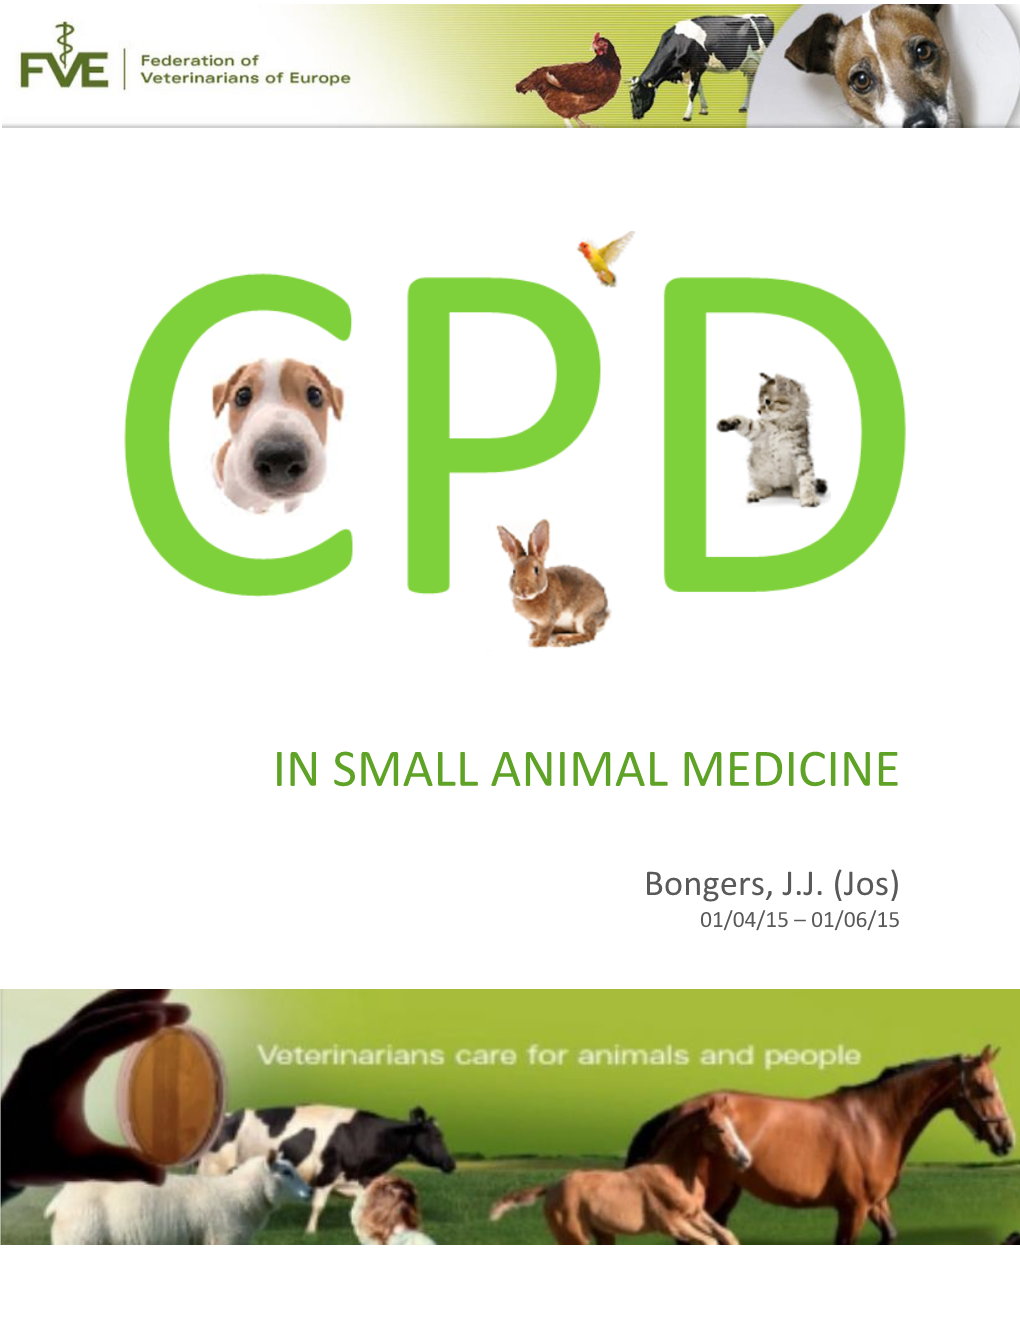 In Small Animal Medicine